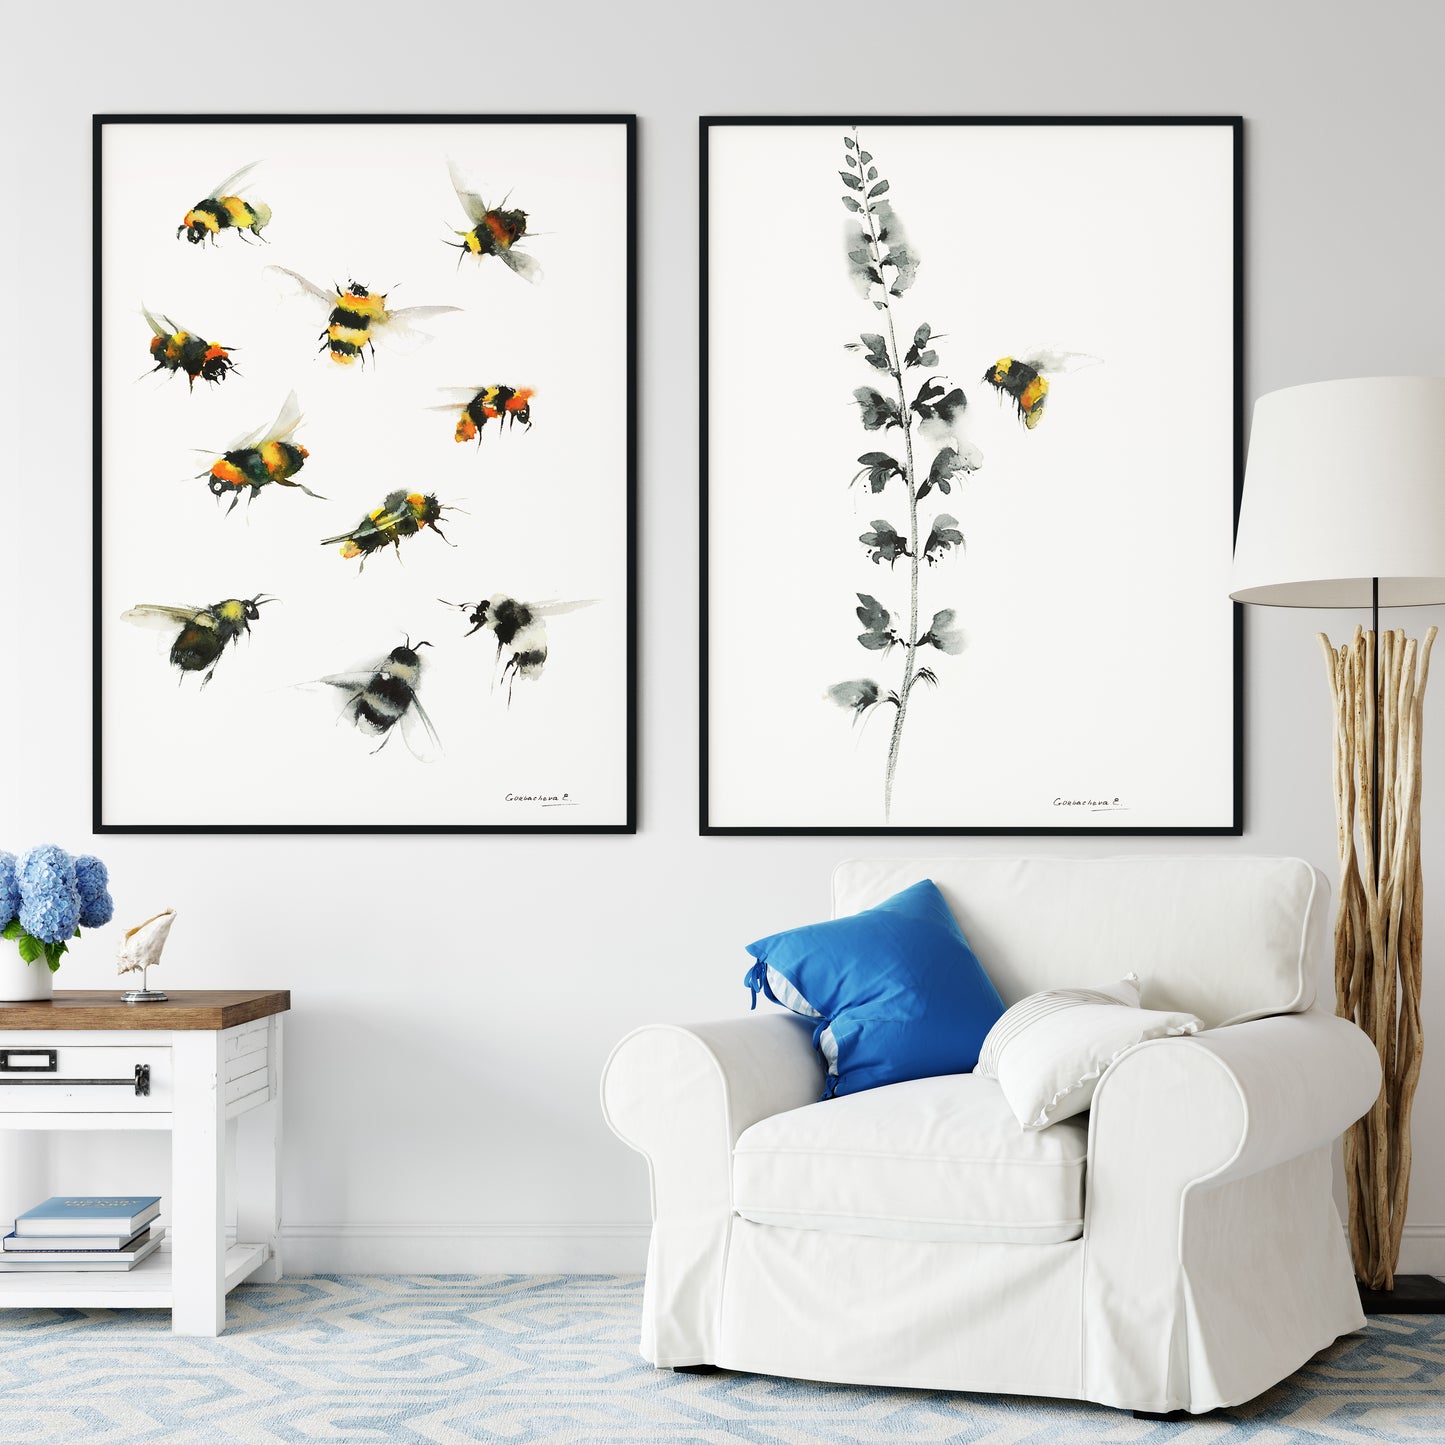 Set of 2 Bee Flower Prints, Watercolor Art, Black & Yellow Wall Decor, Minimalist Kids Room Decor, Floral Painting